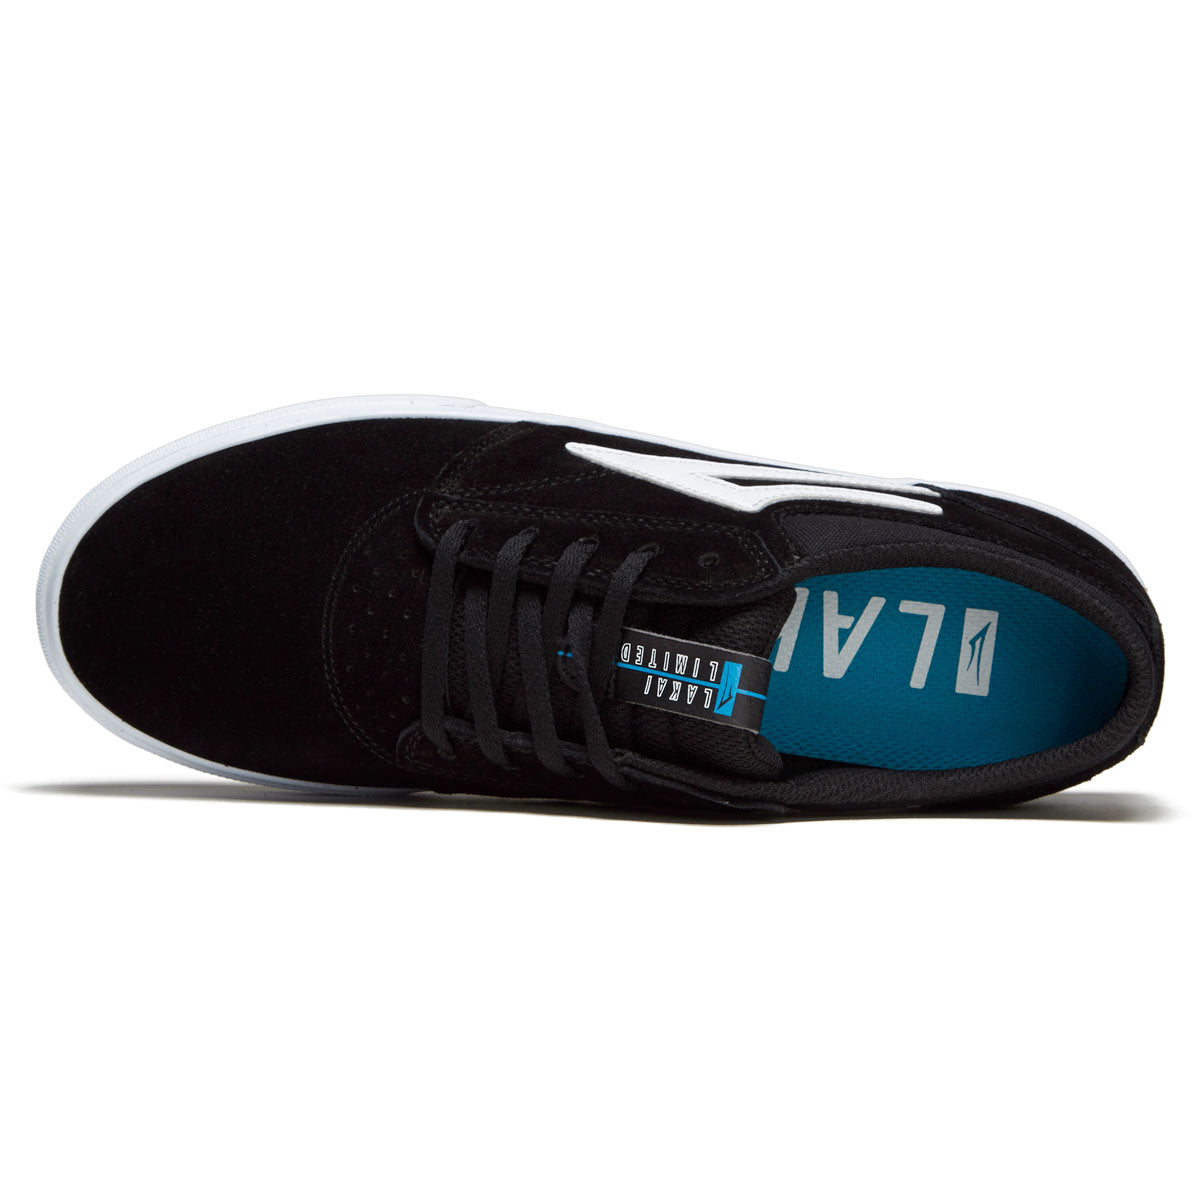 Lakai Griffin Shoes - Black image 3